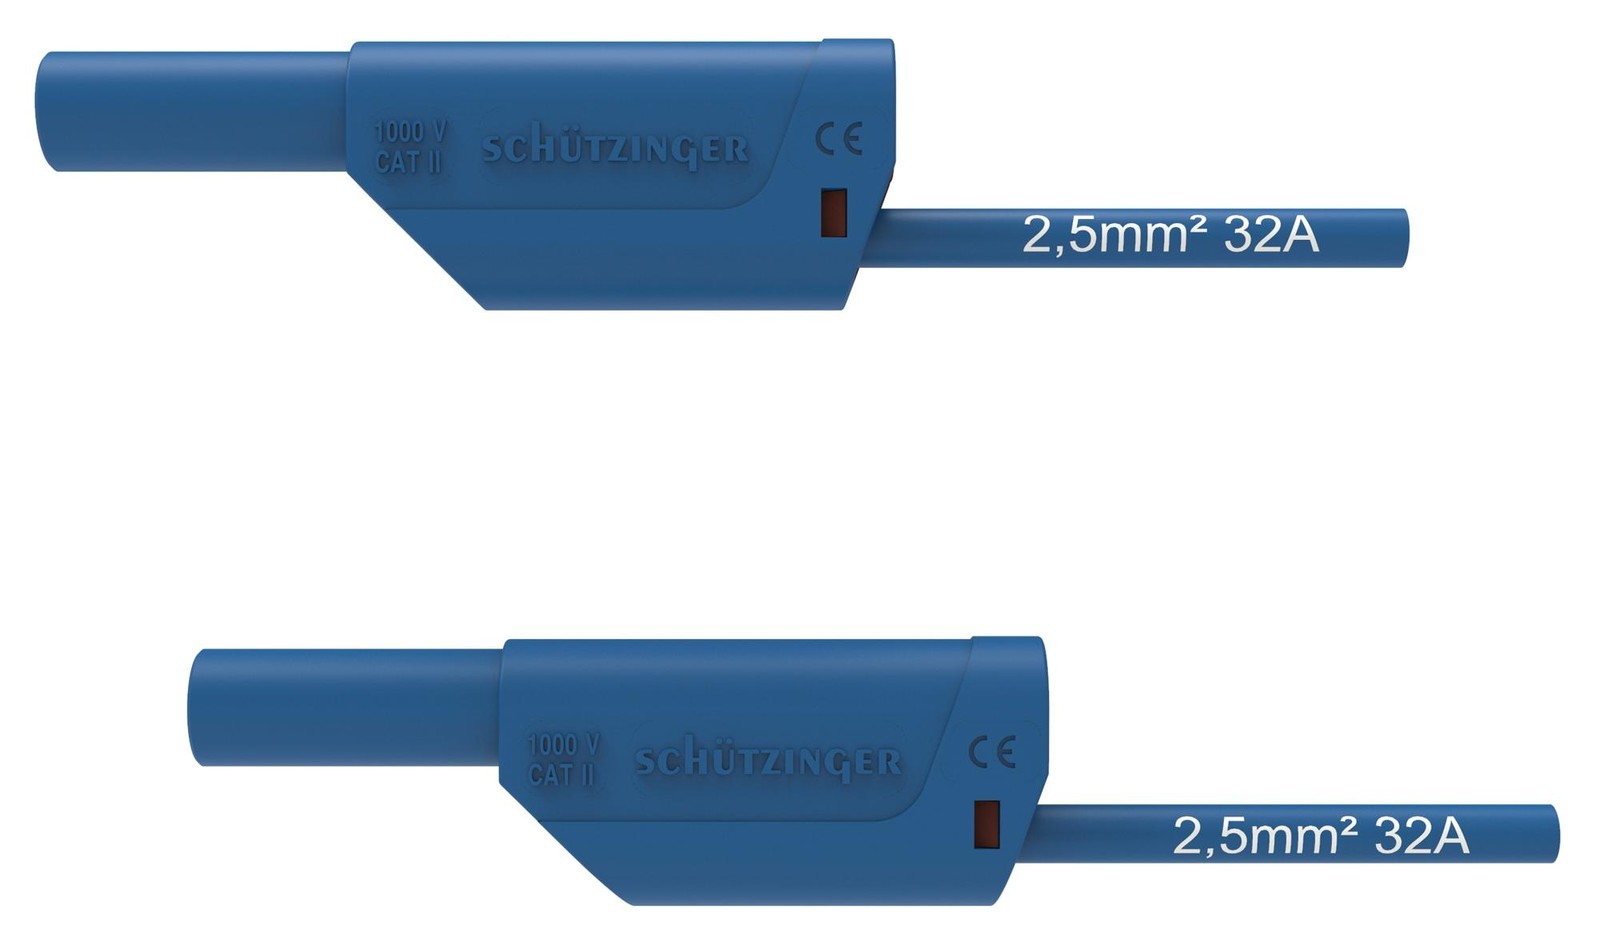 Schutzinger Di Vsfk 8500 / 2.5 / 50 / Bl 4mm Banana Plug-Sq, Shrouded, Bl, 500mm